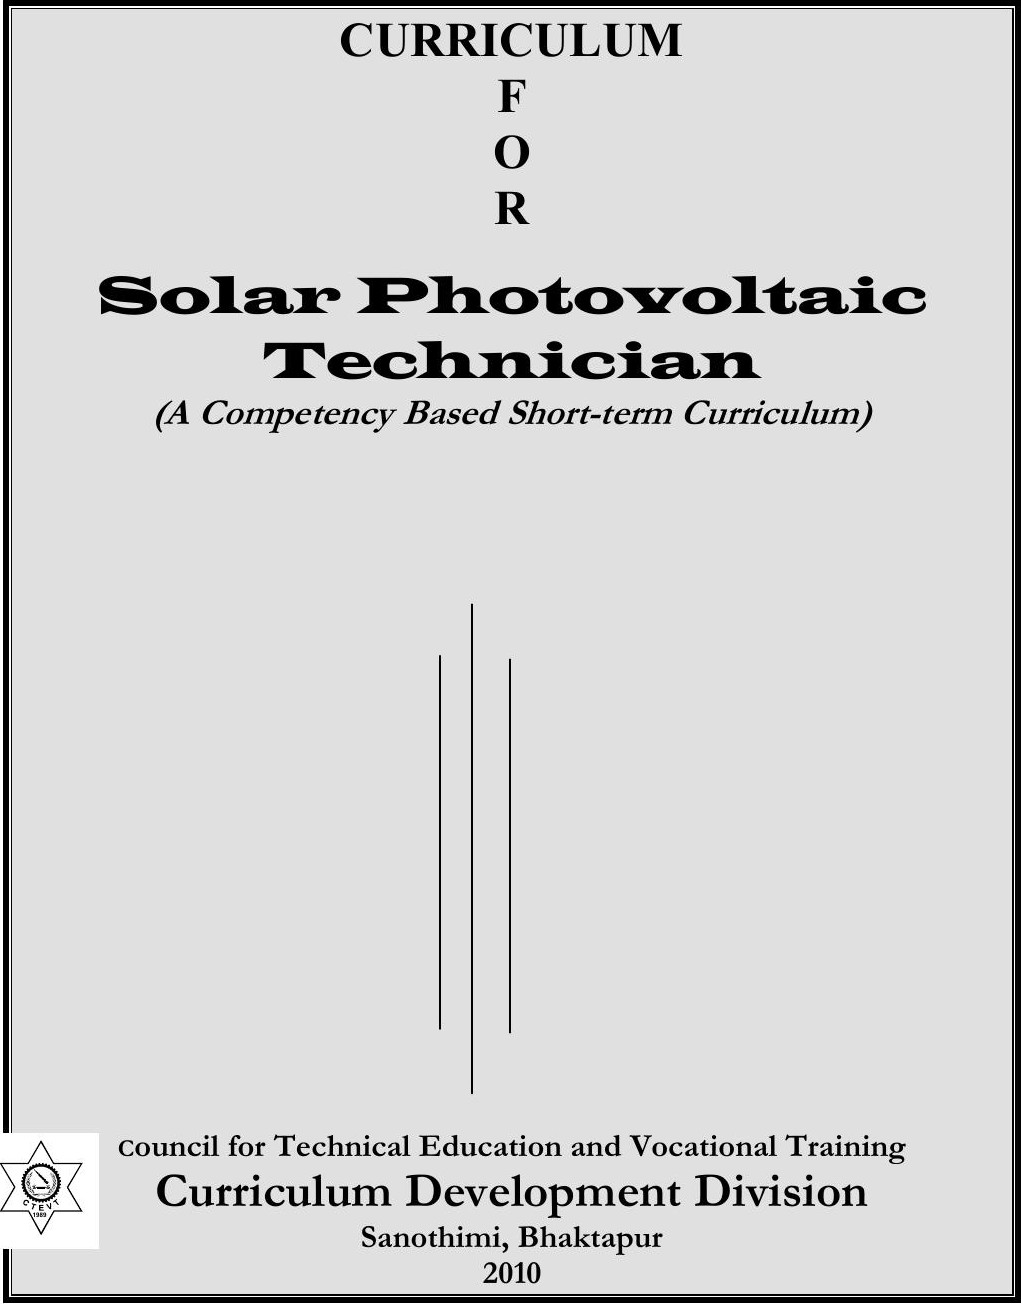 Solar Photovoltaic Technician, 2010